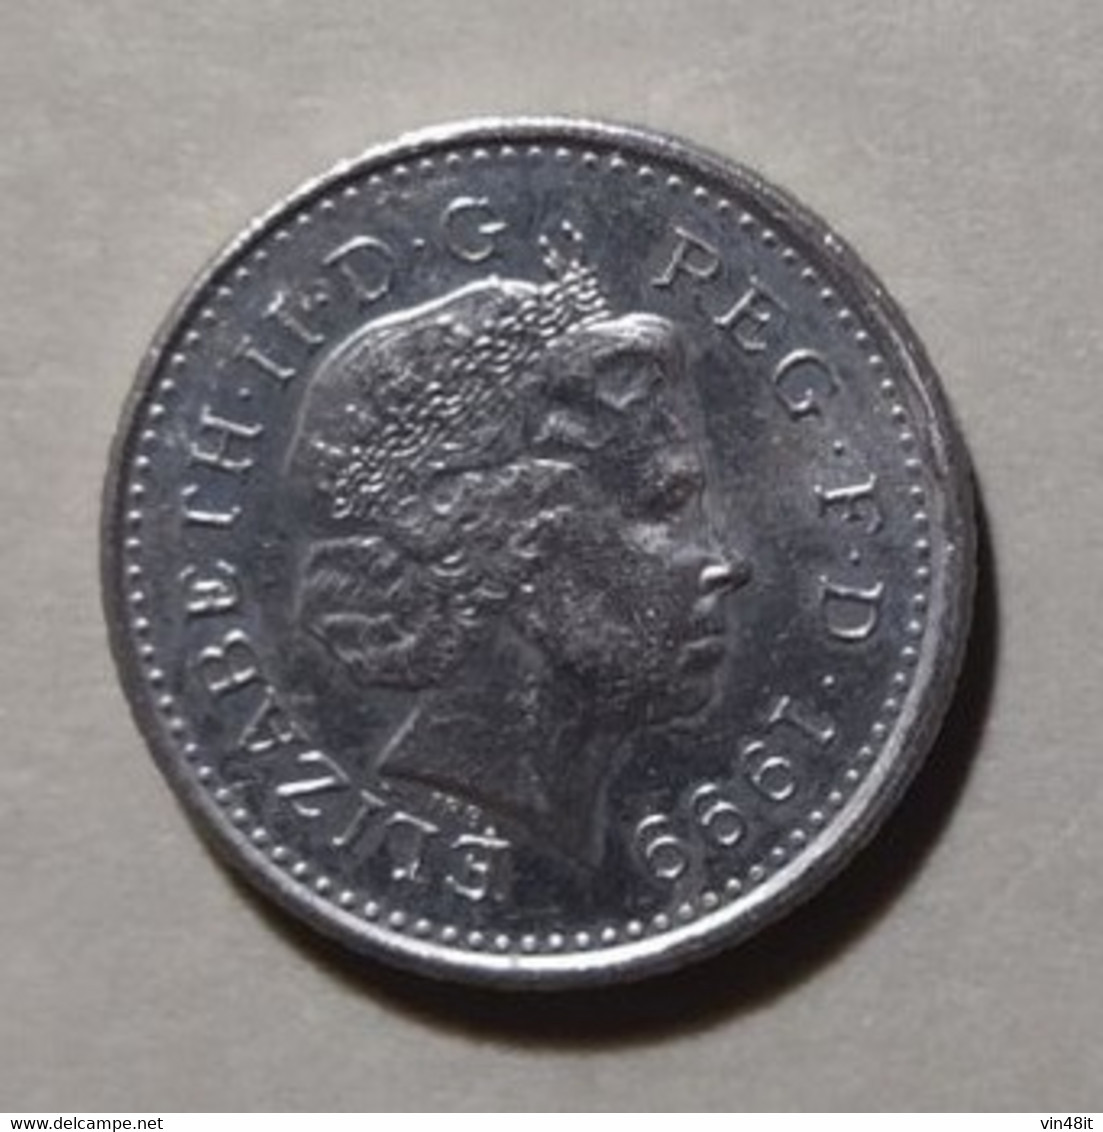 1999 - GRAN BRETAGNA - MONETA DEL VALORE DI 5 PENCE -  USATA - 5 Pence & 5 New Pence